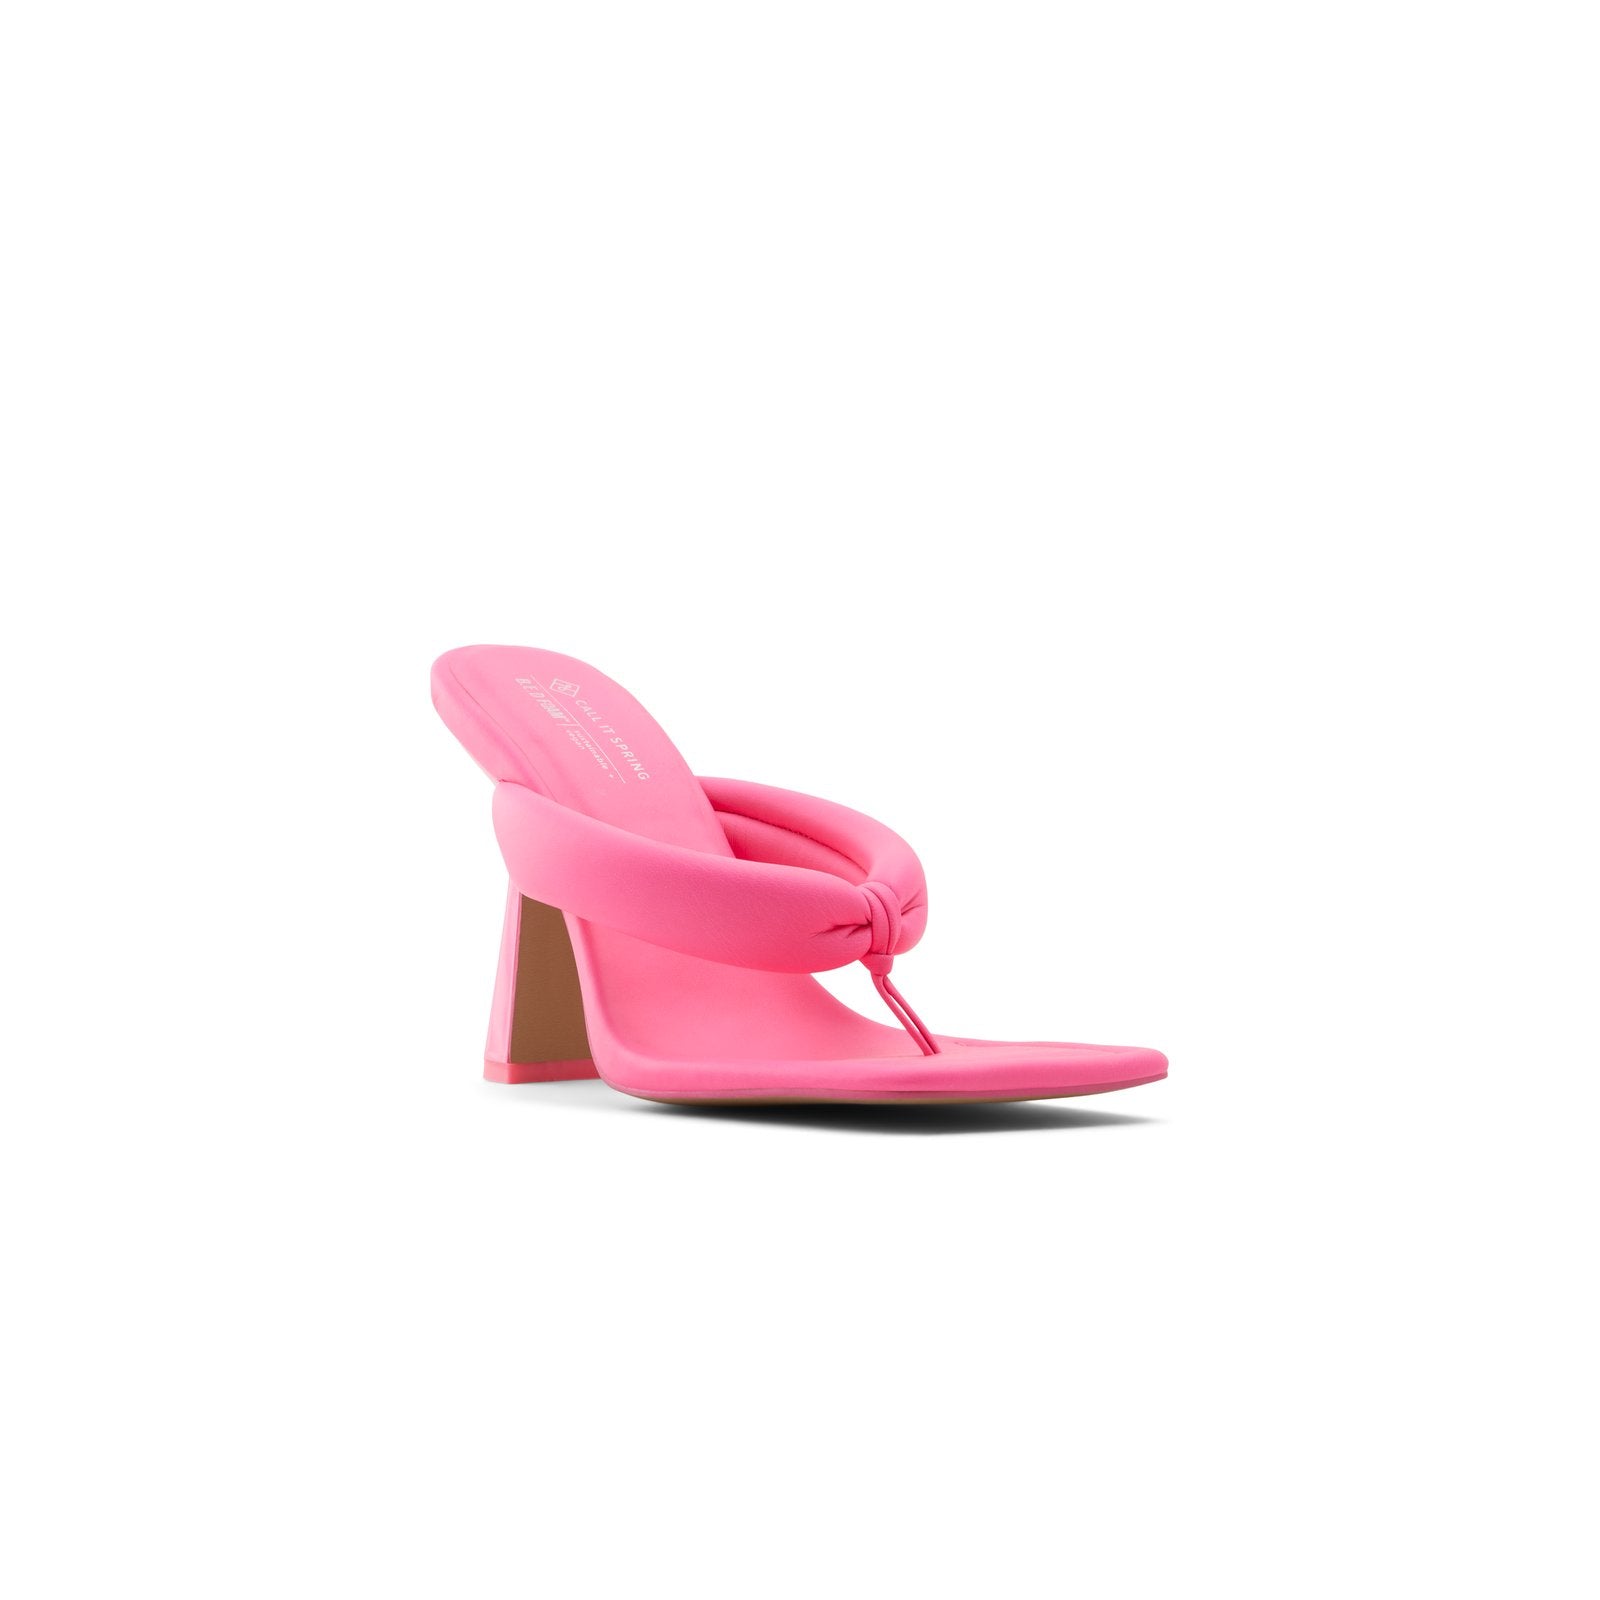 Giulianna / Heeled Sandals Women Shoes - Bright Pink - CALL IT SPRING KSA